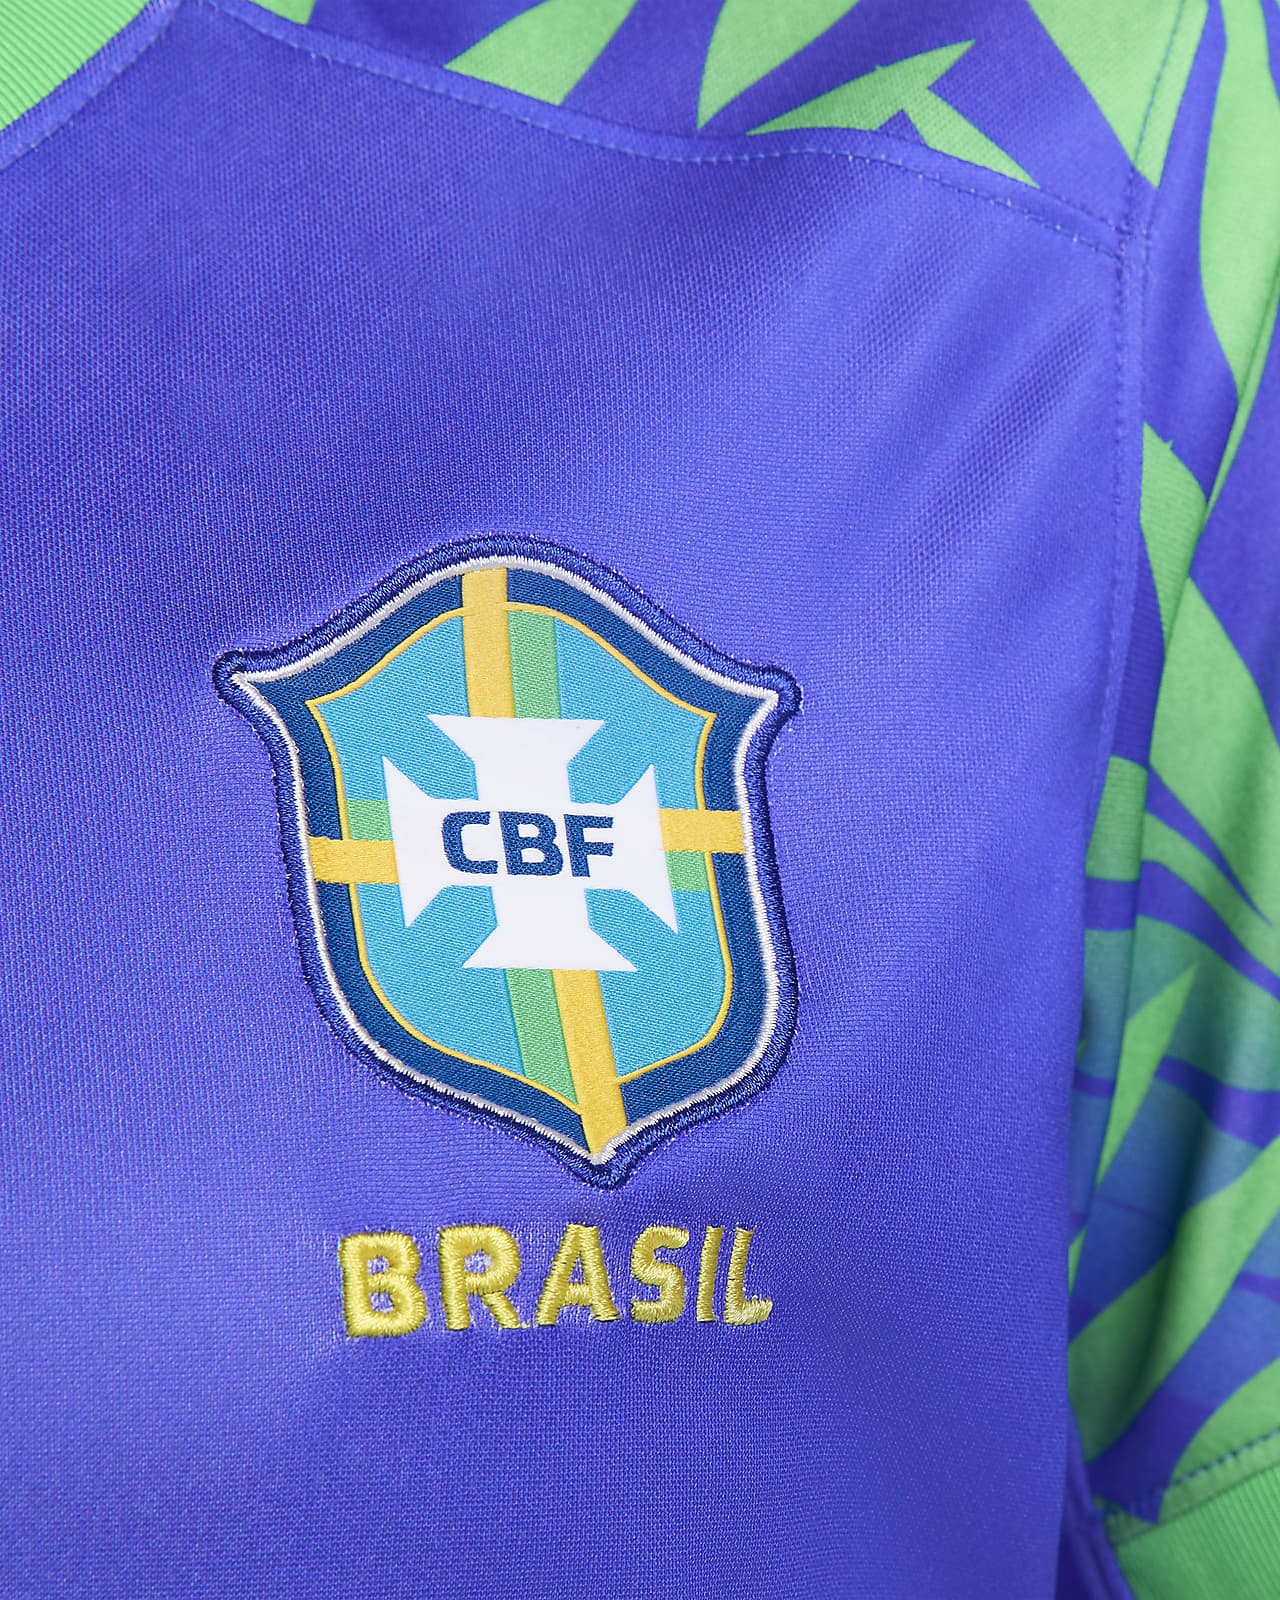 NIKE FUTURO TEE Collection Brasil Soccer Football T-Shirt XL Blue